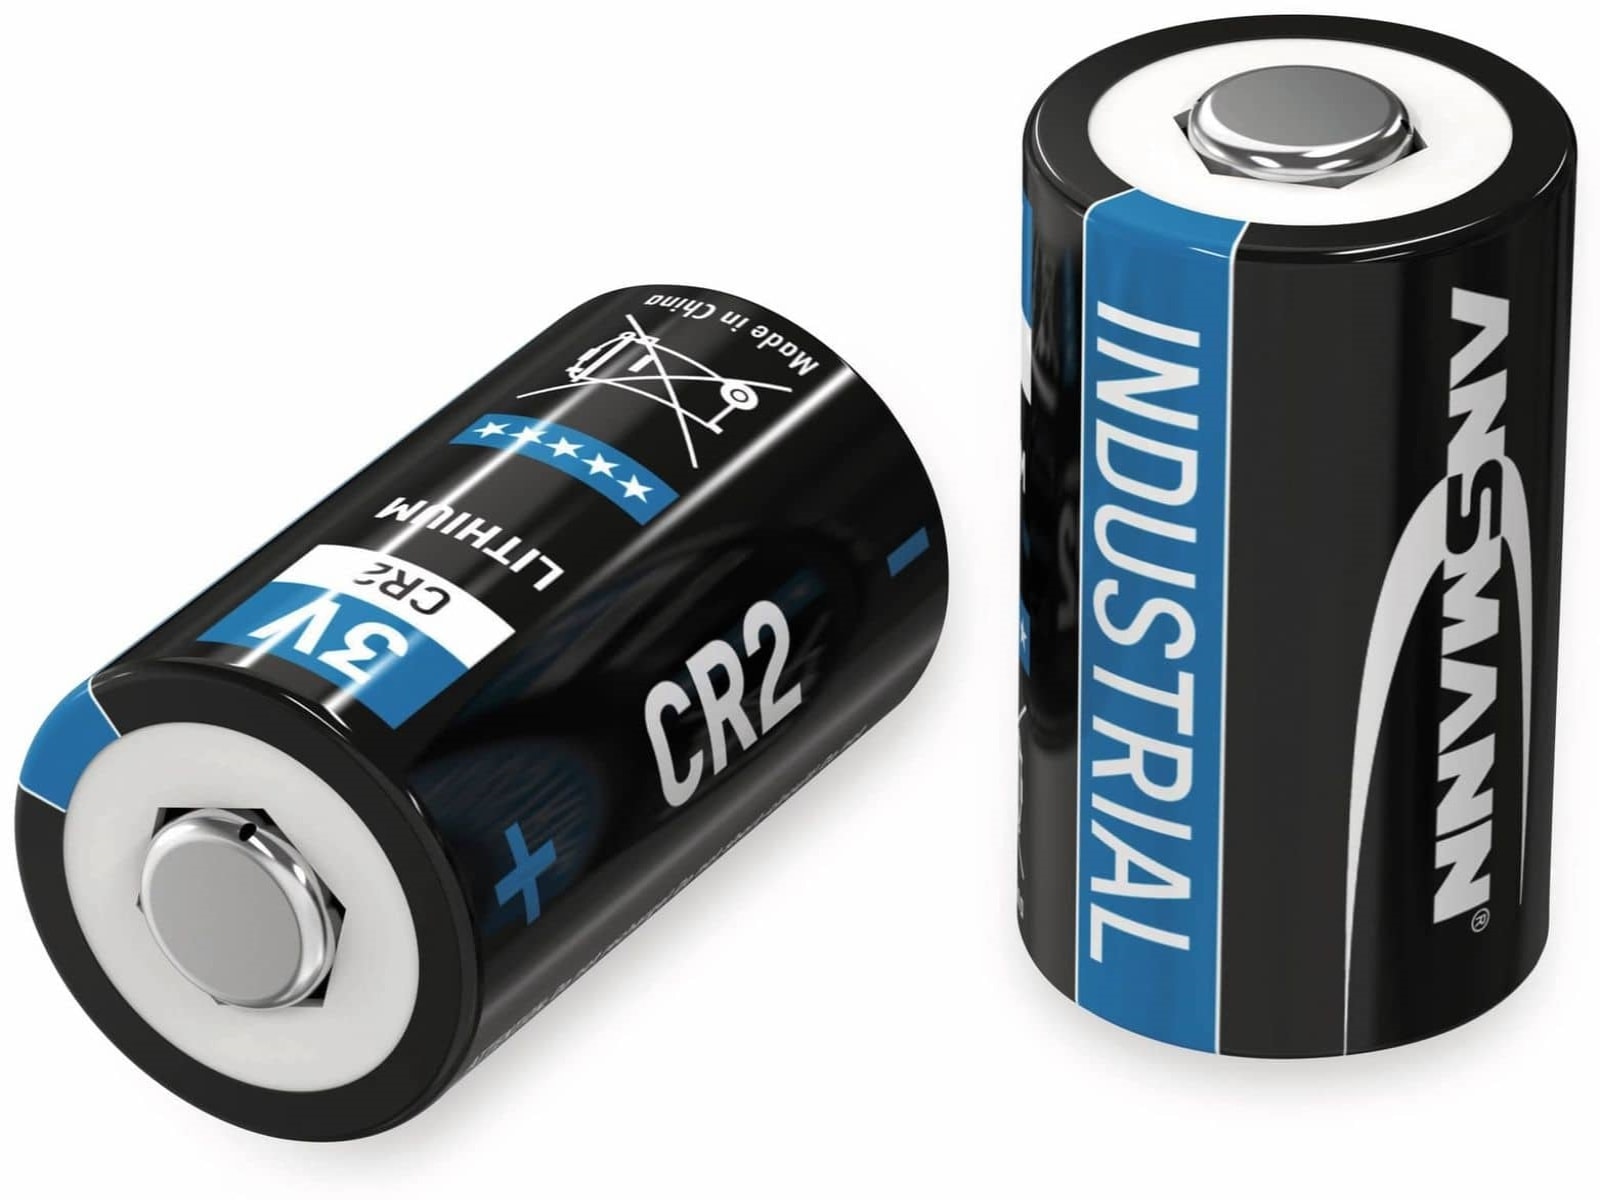 ANSMANN Lithium-Batterie CR 2, 10 Stück